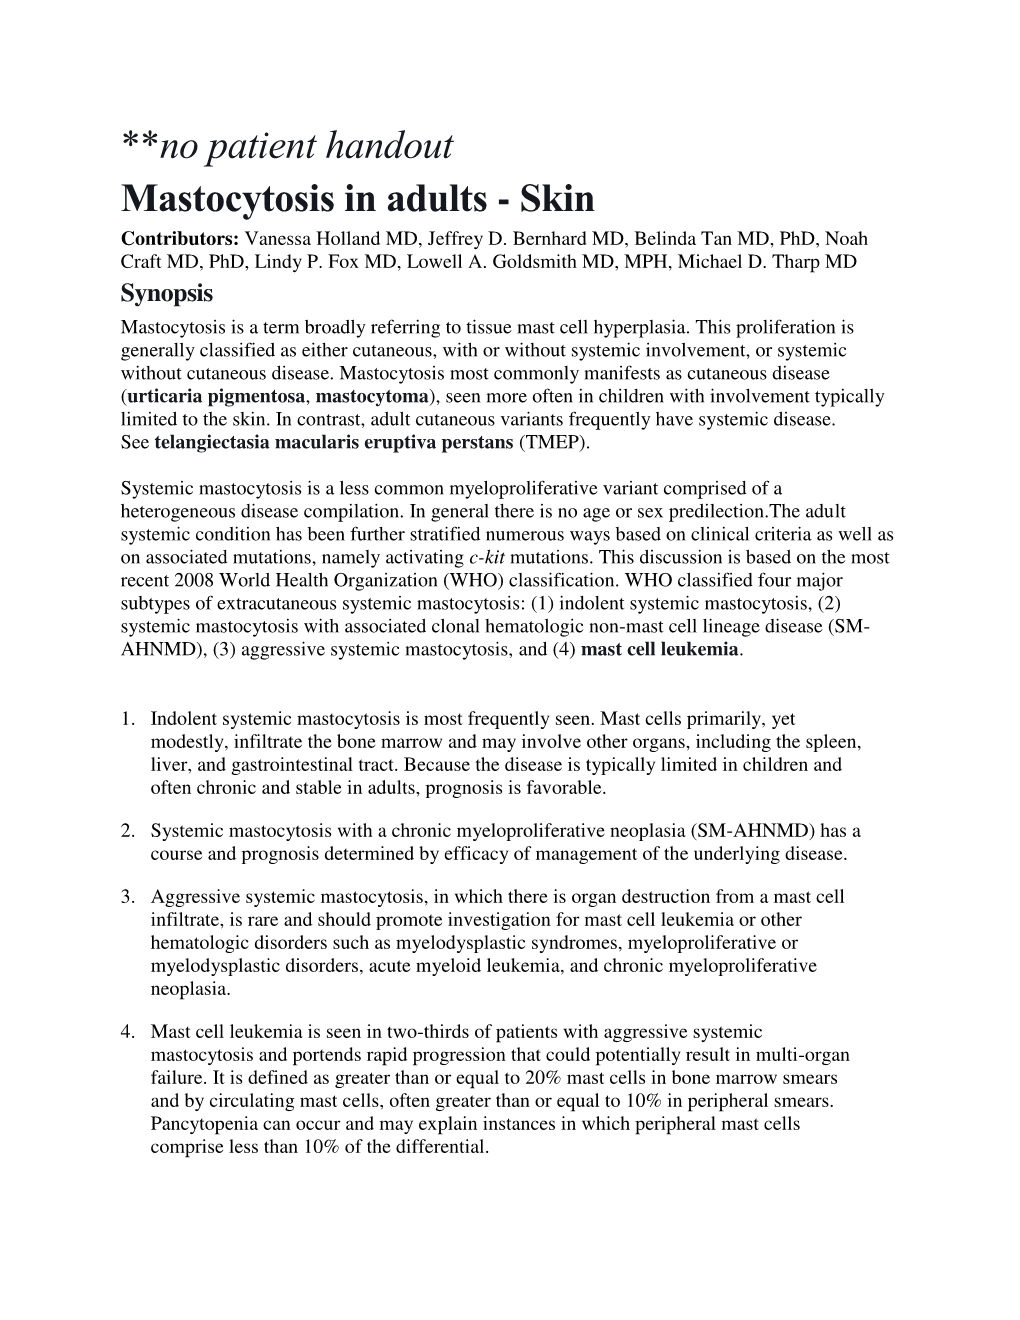 **No Patient Handout Mastocytosis in Adults - Skin Contributors: Vanessa Holland MD, Jeffrey D